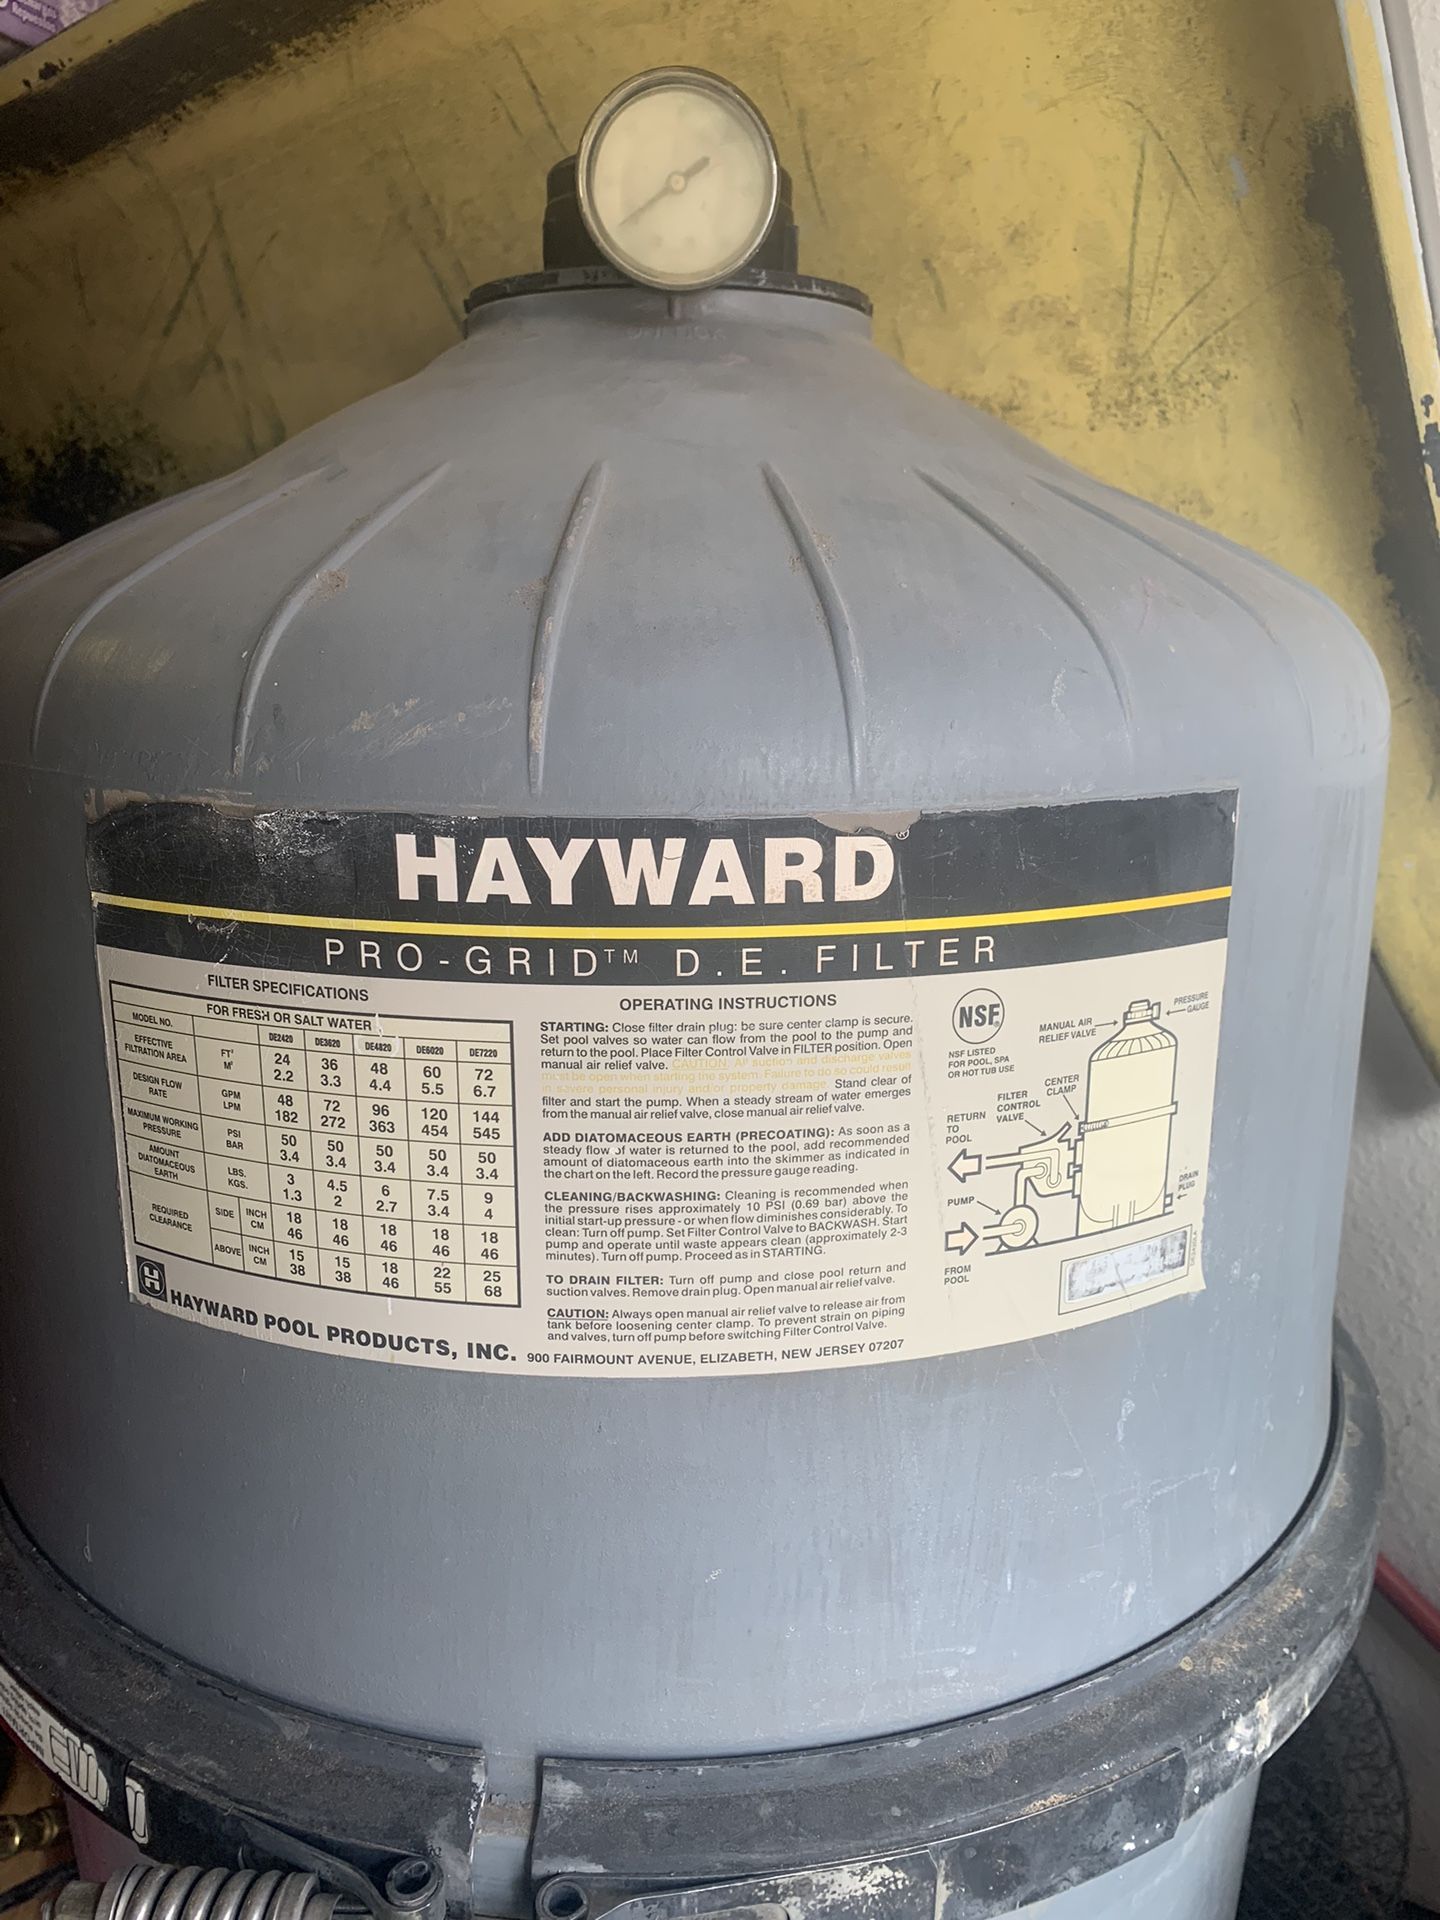 Pro grid Hayward D. E (Diatomaceous Earth) Pool filter 